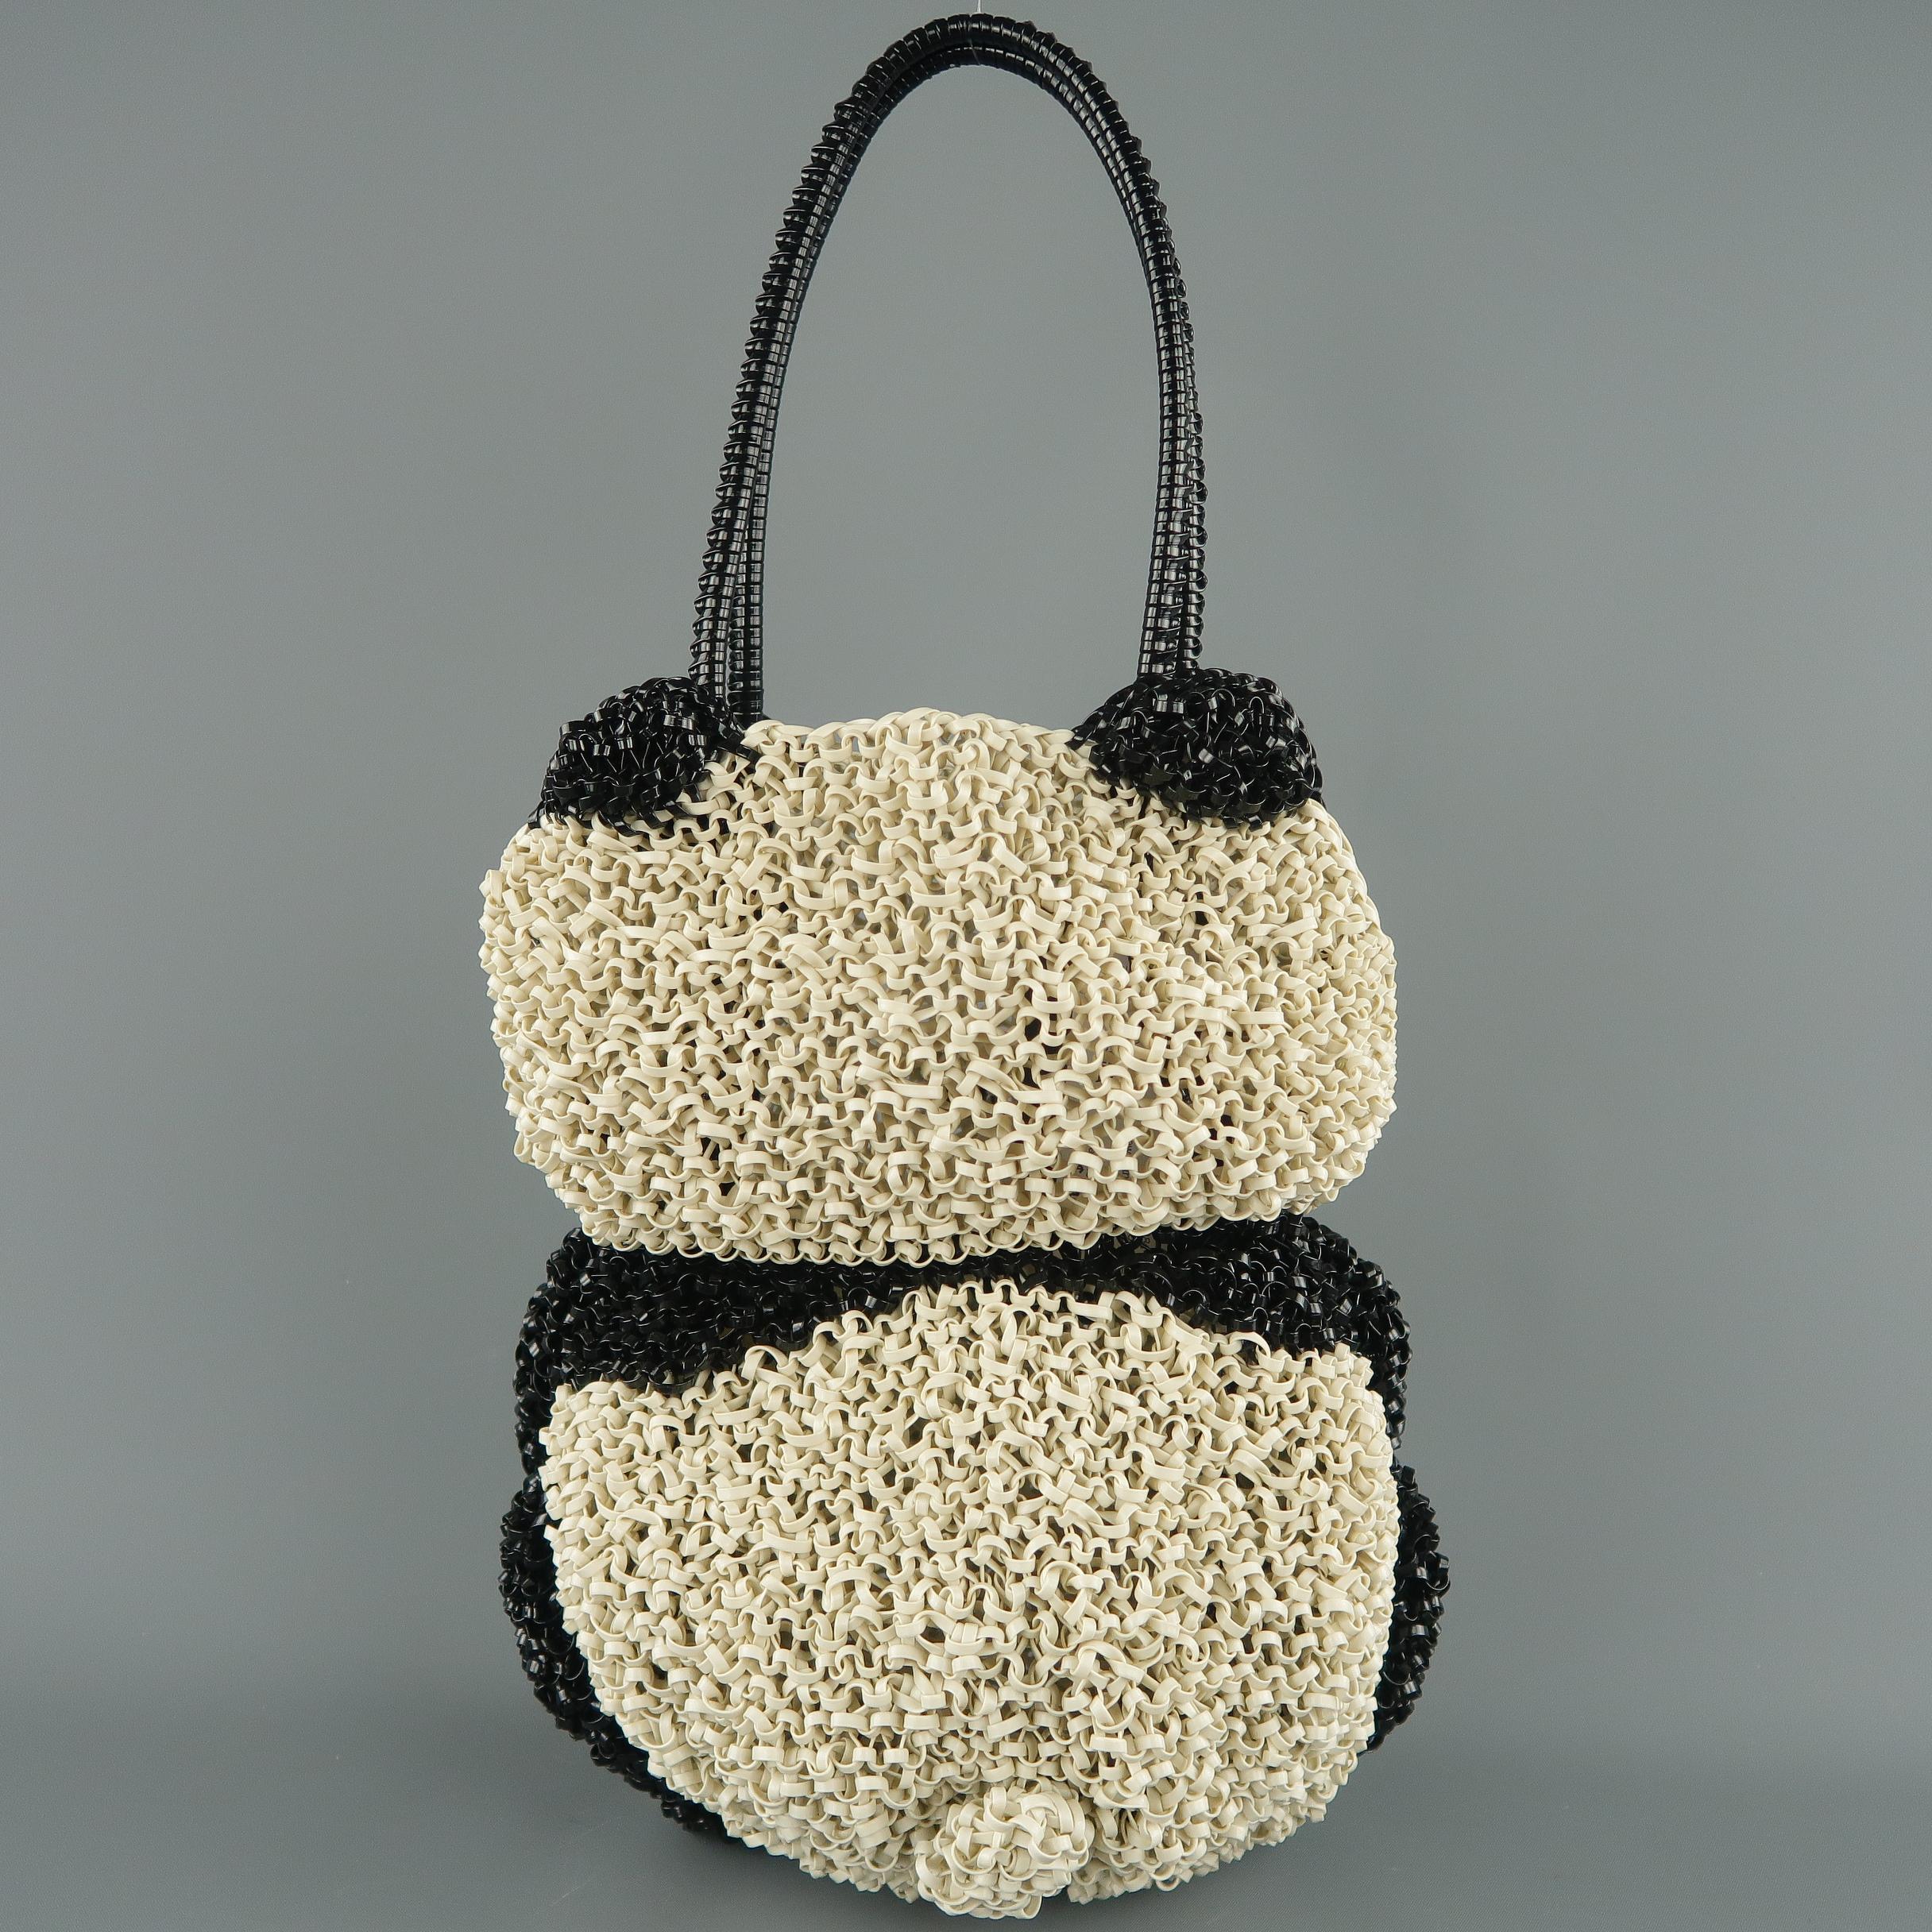 ANTEPRIMA Crochet Swarovski Crystal 3D PANDA WIREBAG Handbag 1